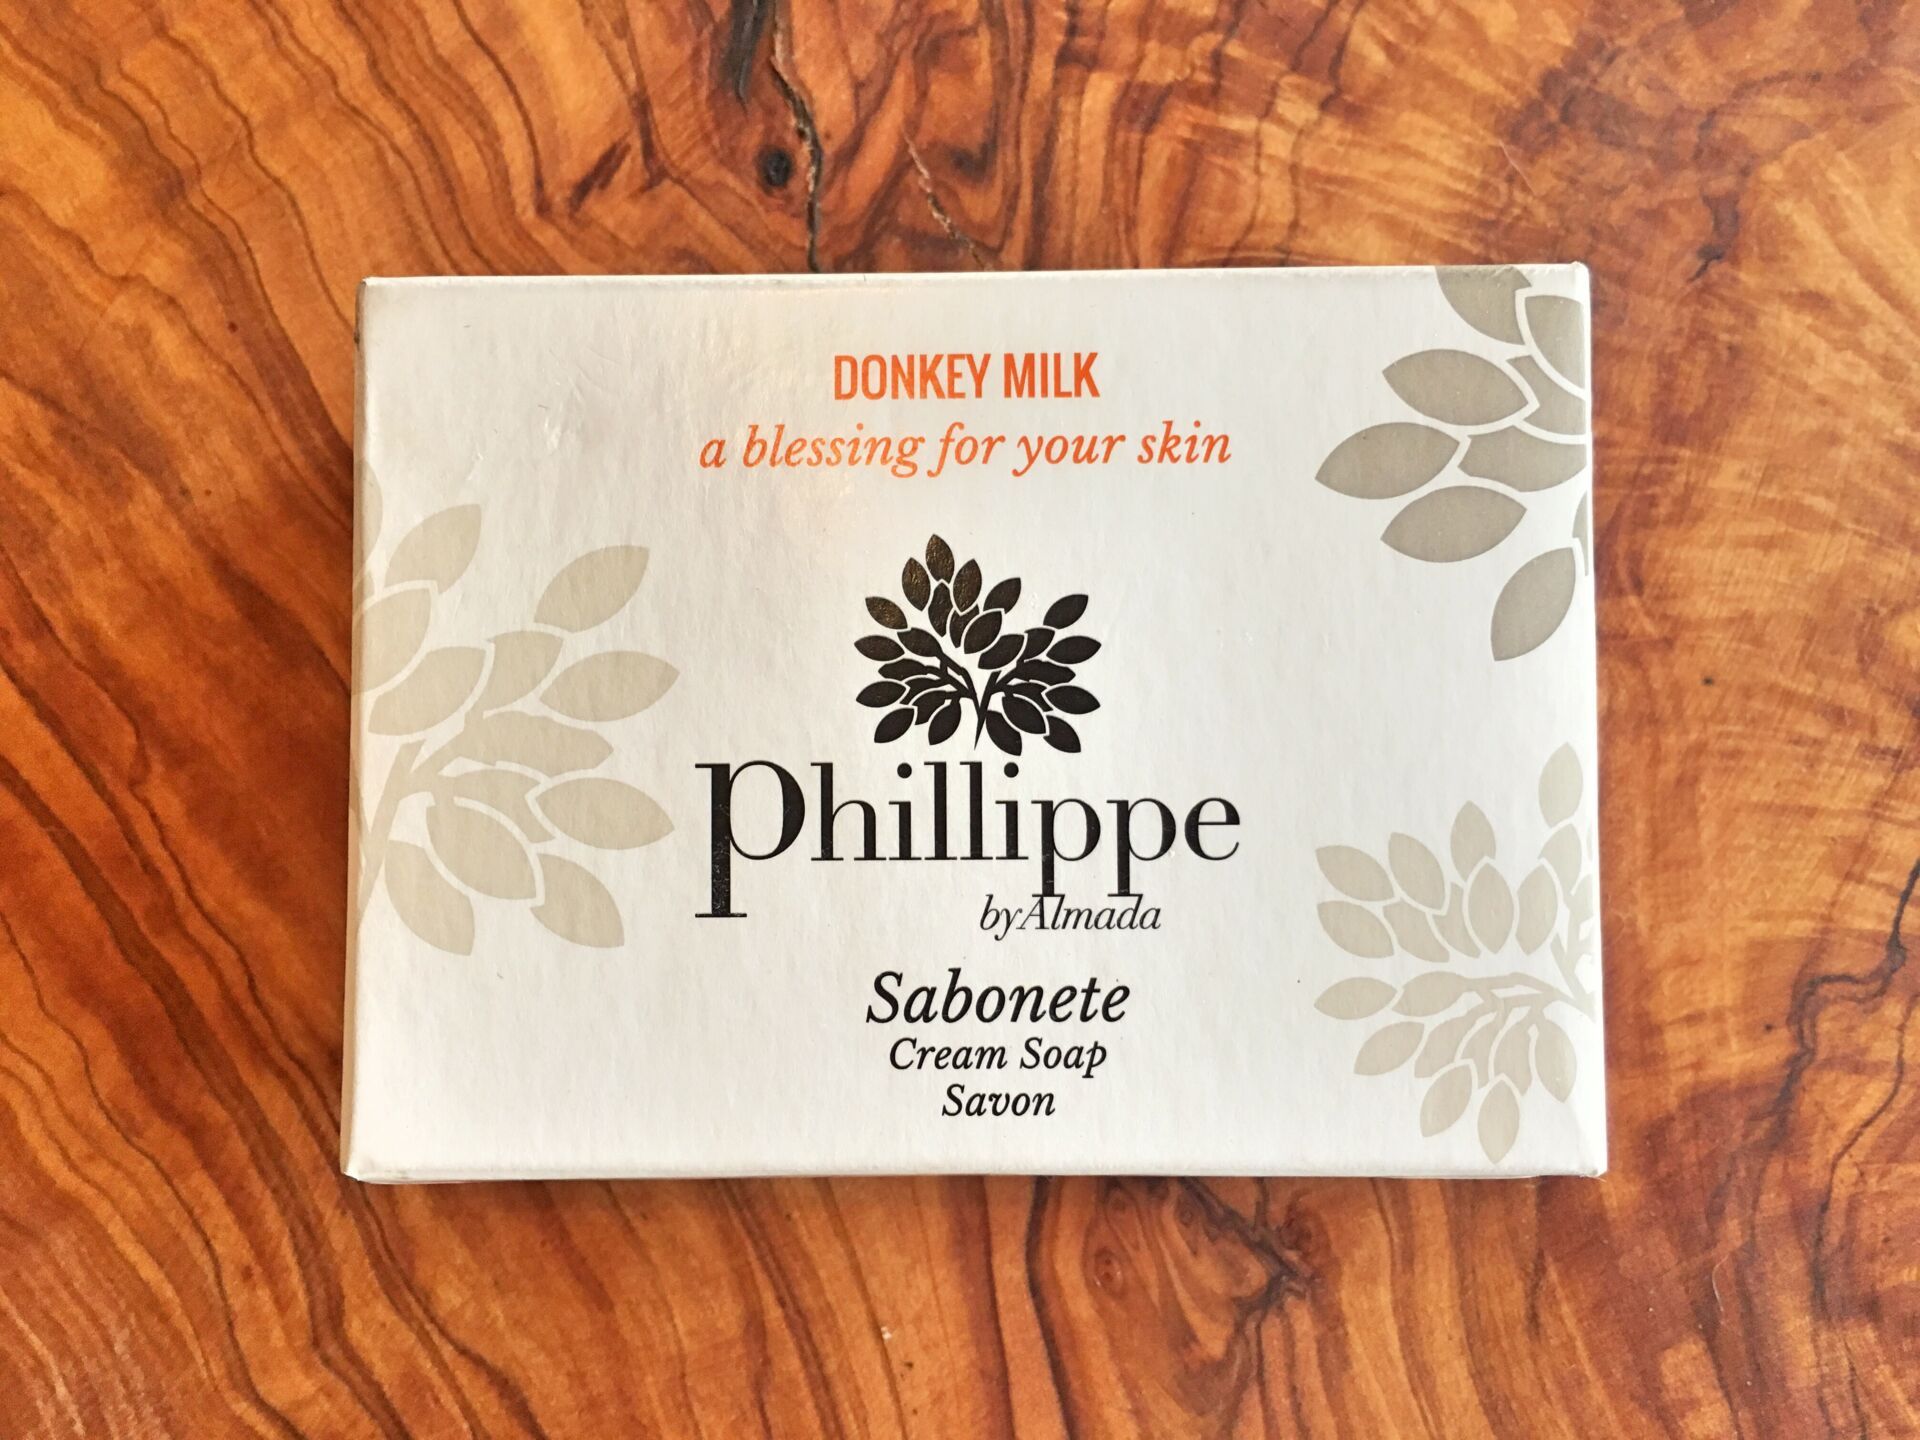 Phillippe by Almada donkey milk soap 2